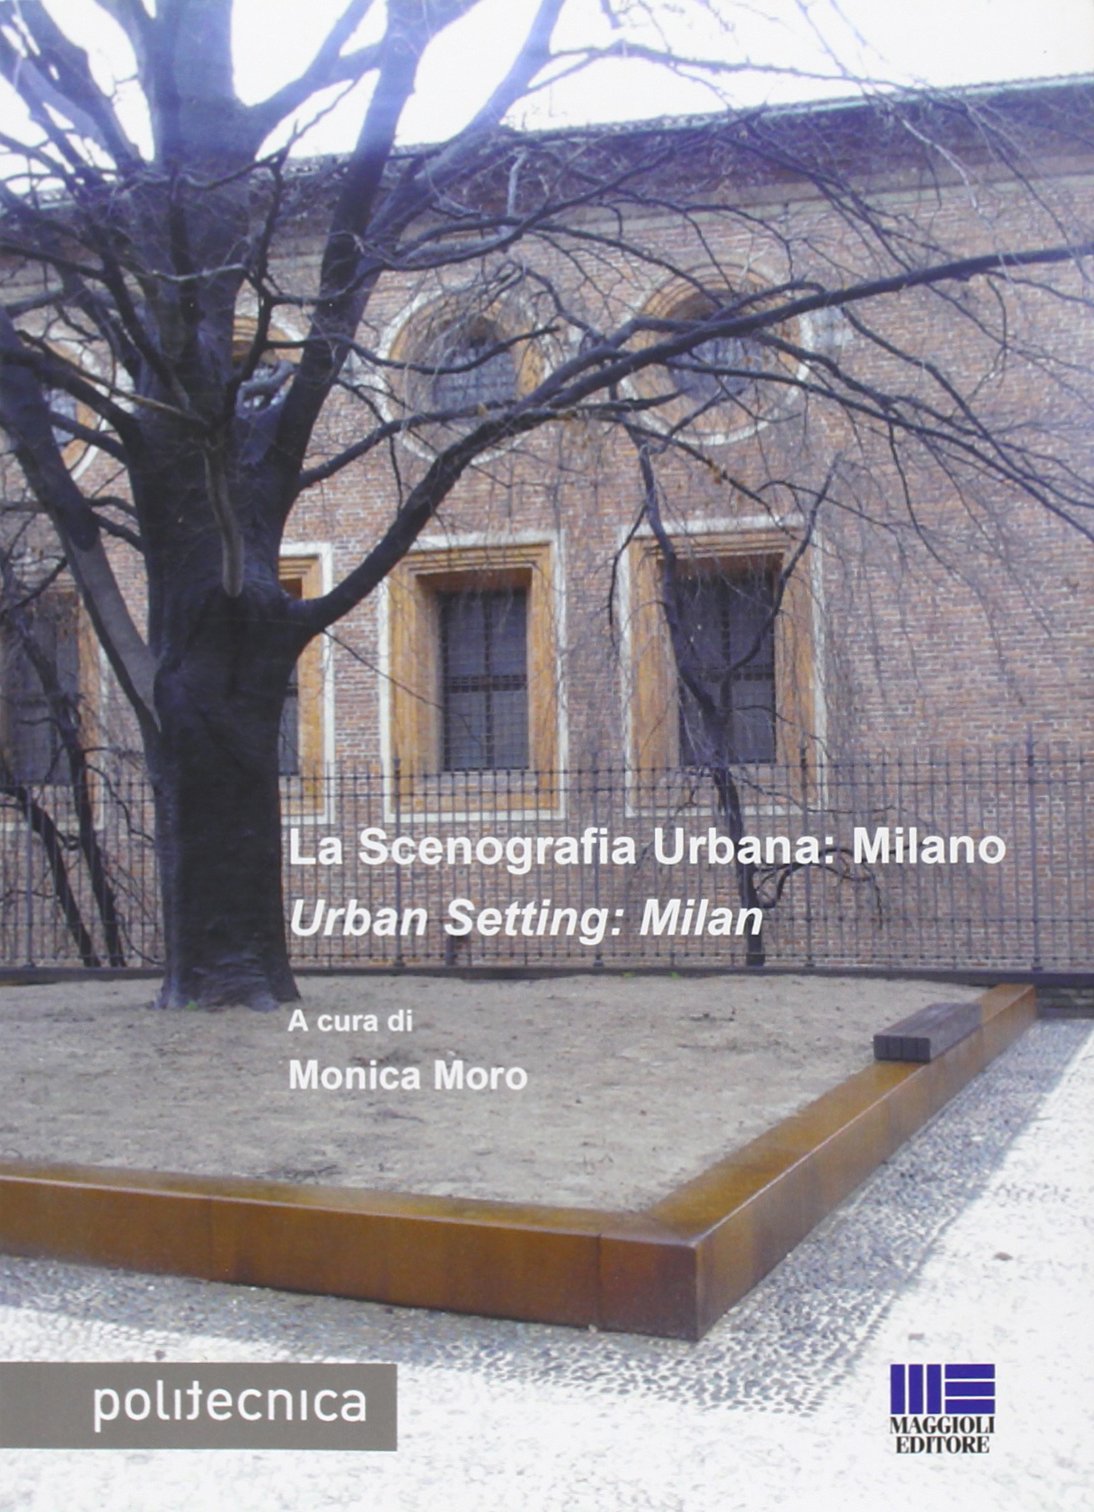 scenografia-urbana-milano